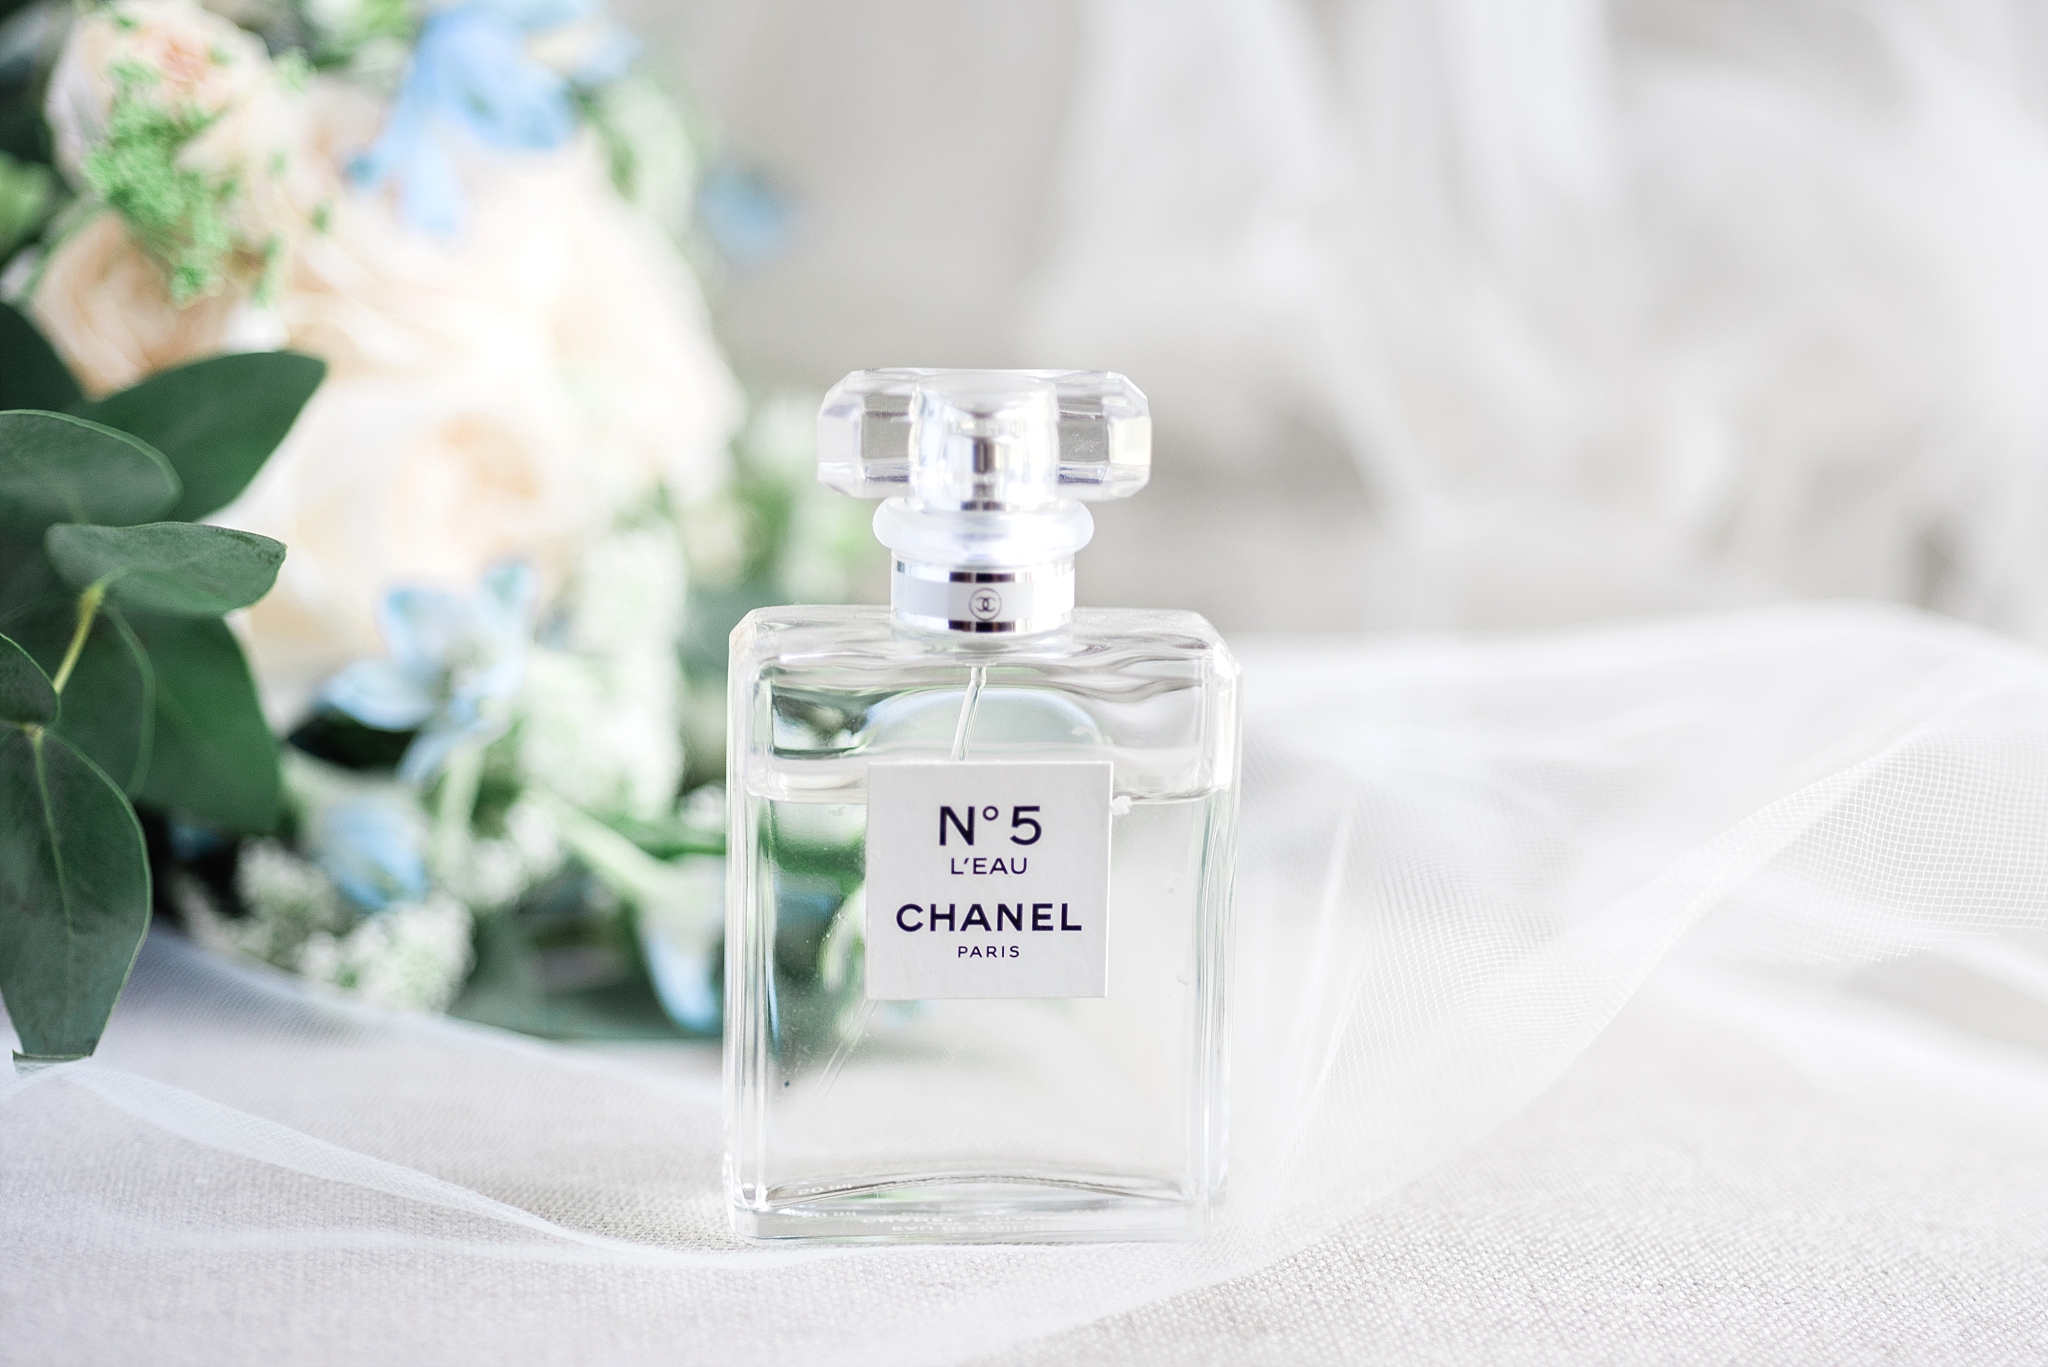 Chanel No. 5 wedding perfume details